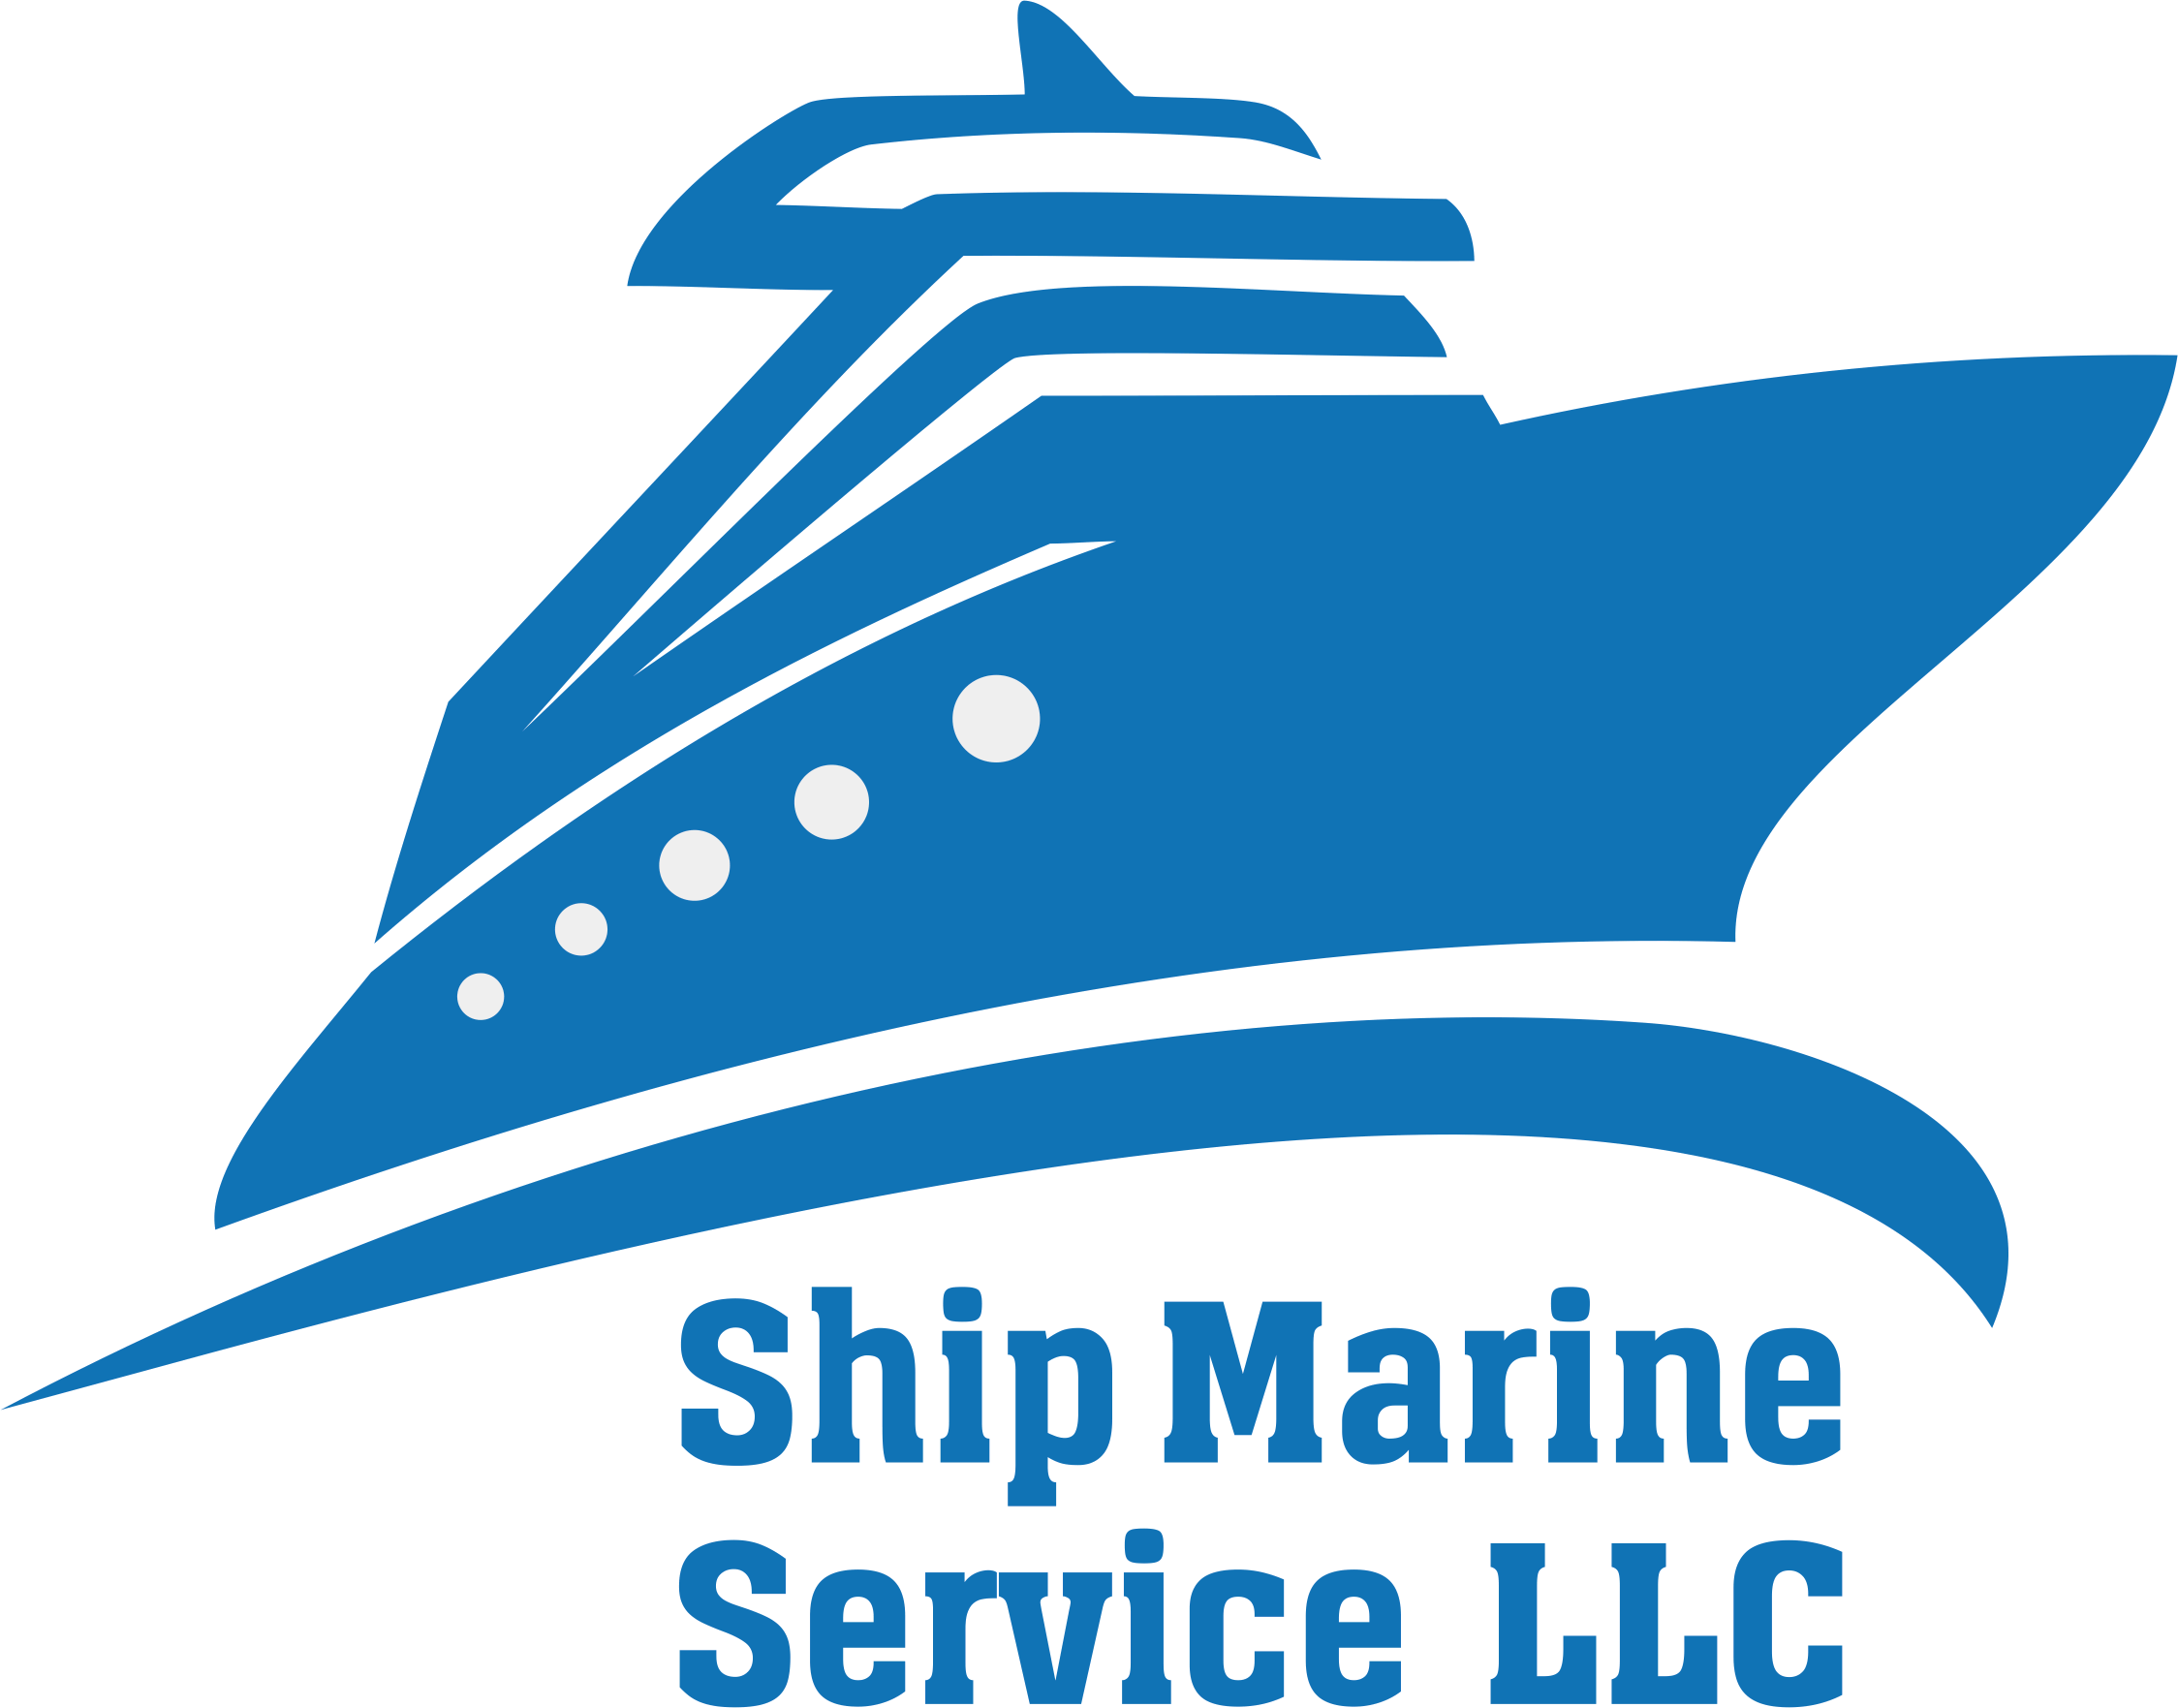 Marine service. Логотип shipping LLC. Шип-шип лого.